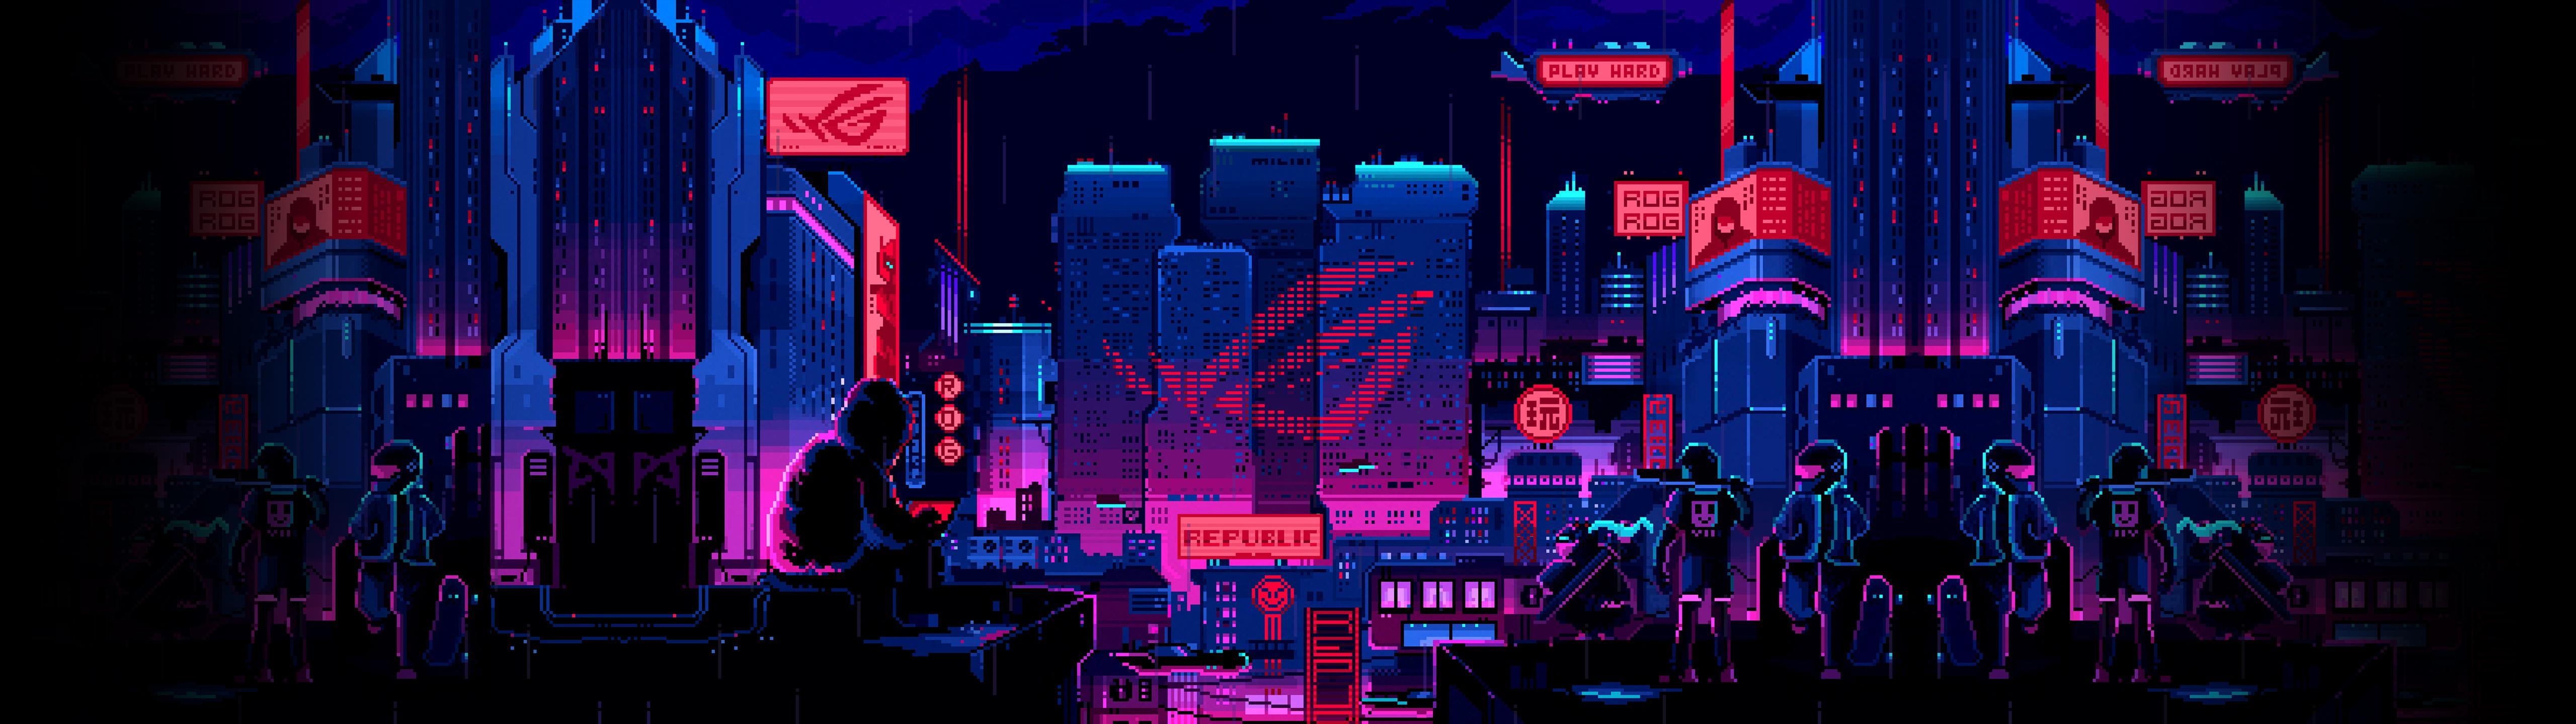 Asus Neon City [5120x1440]